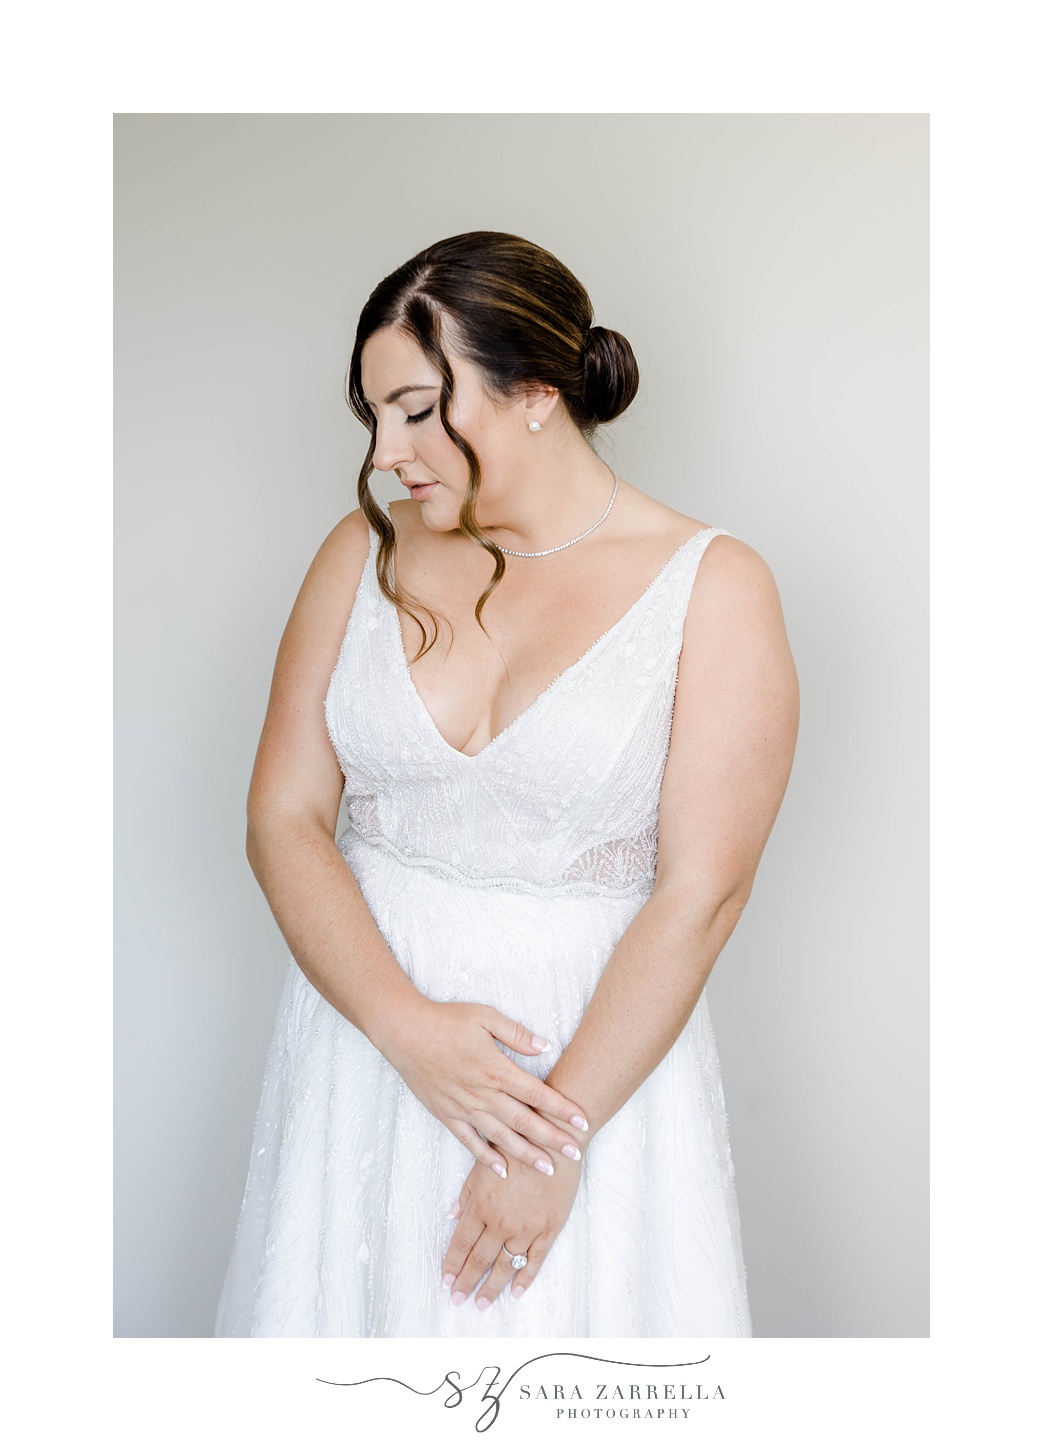 bride stands holding wrist looking over shoulder in dress with v-neck